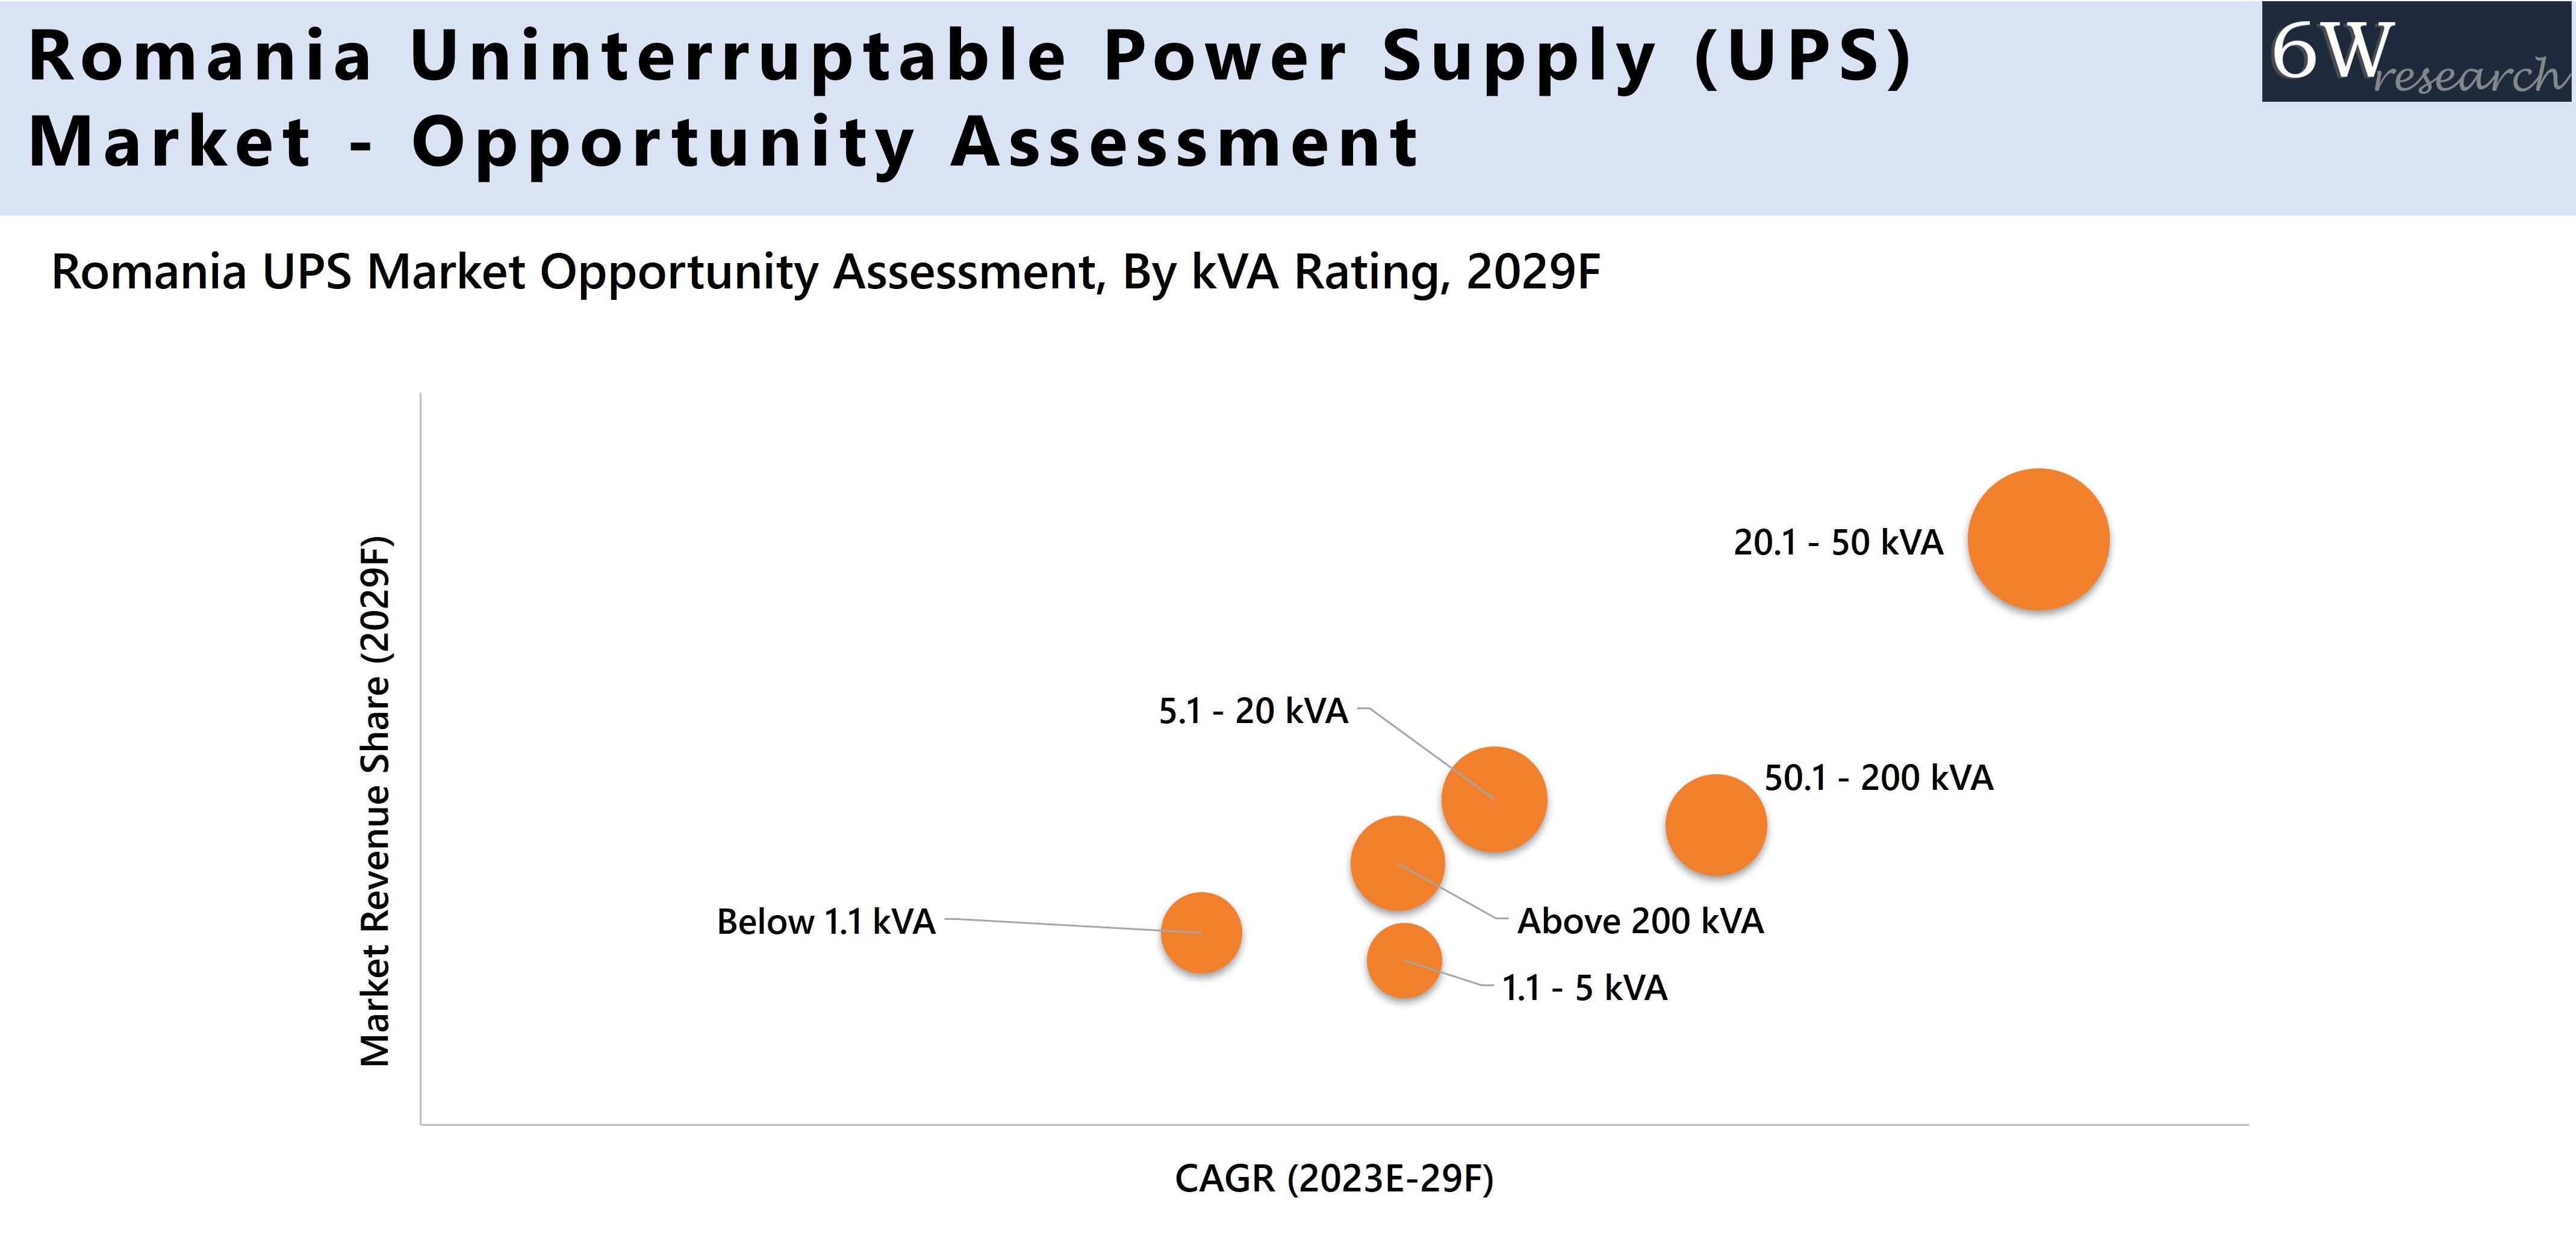 Romania Uninterruptable Power Supply (UPS) Market - Opportunity Assessment